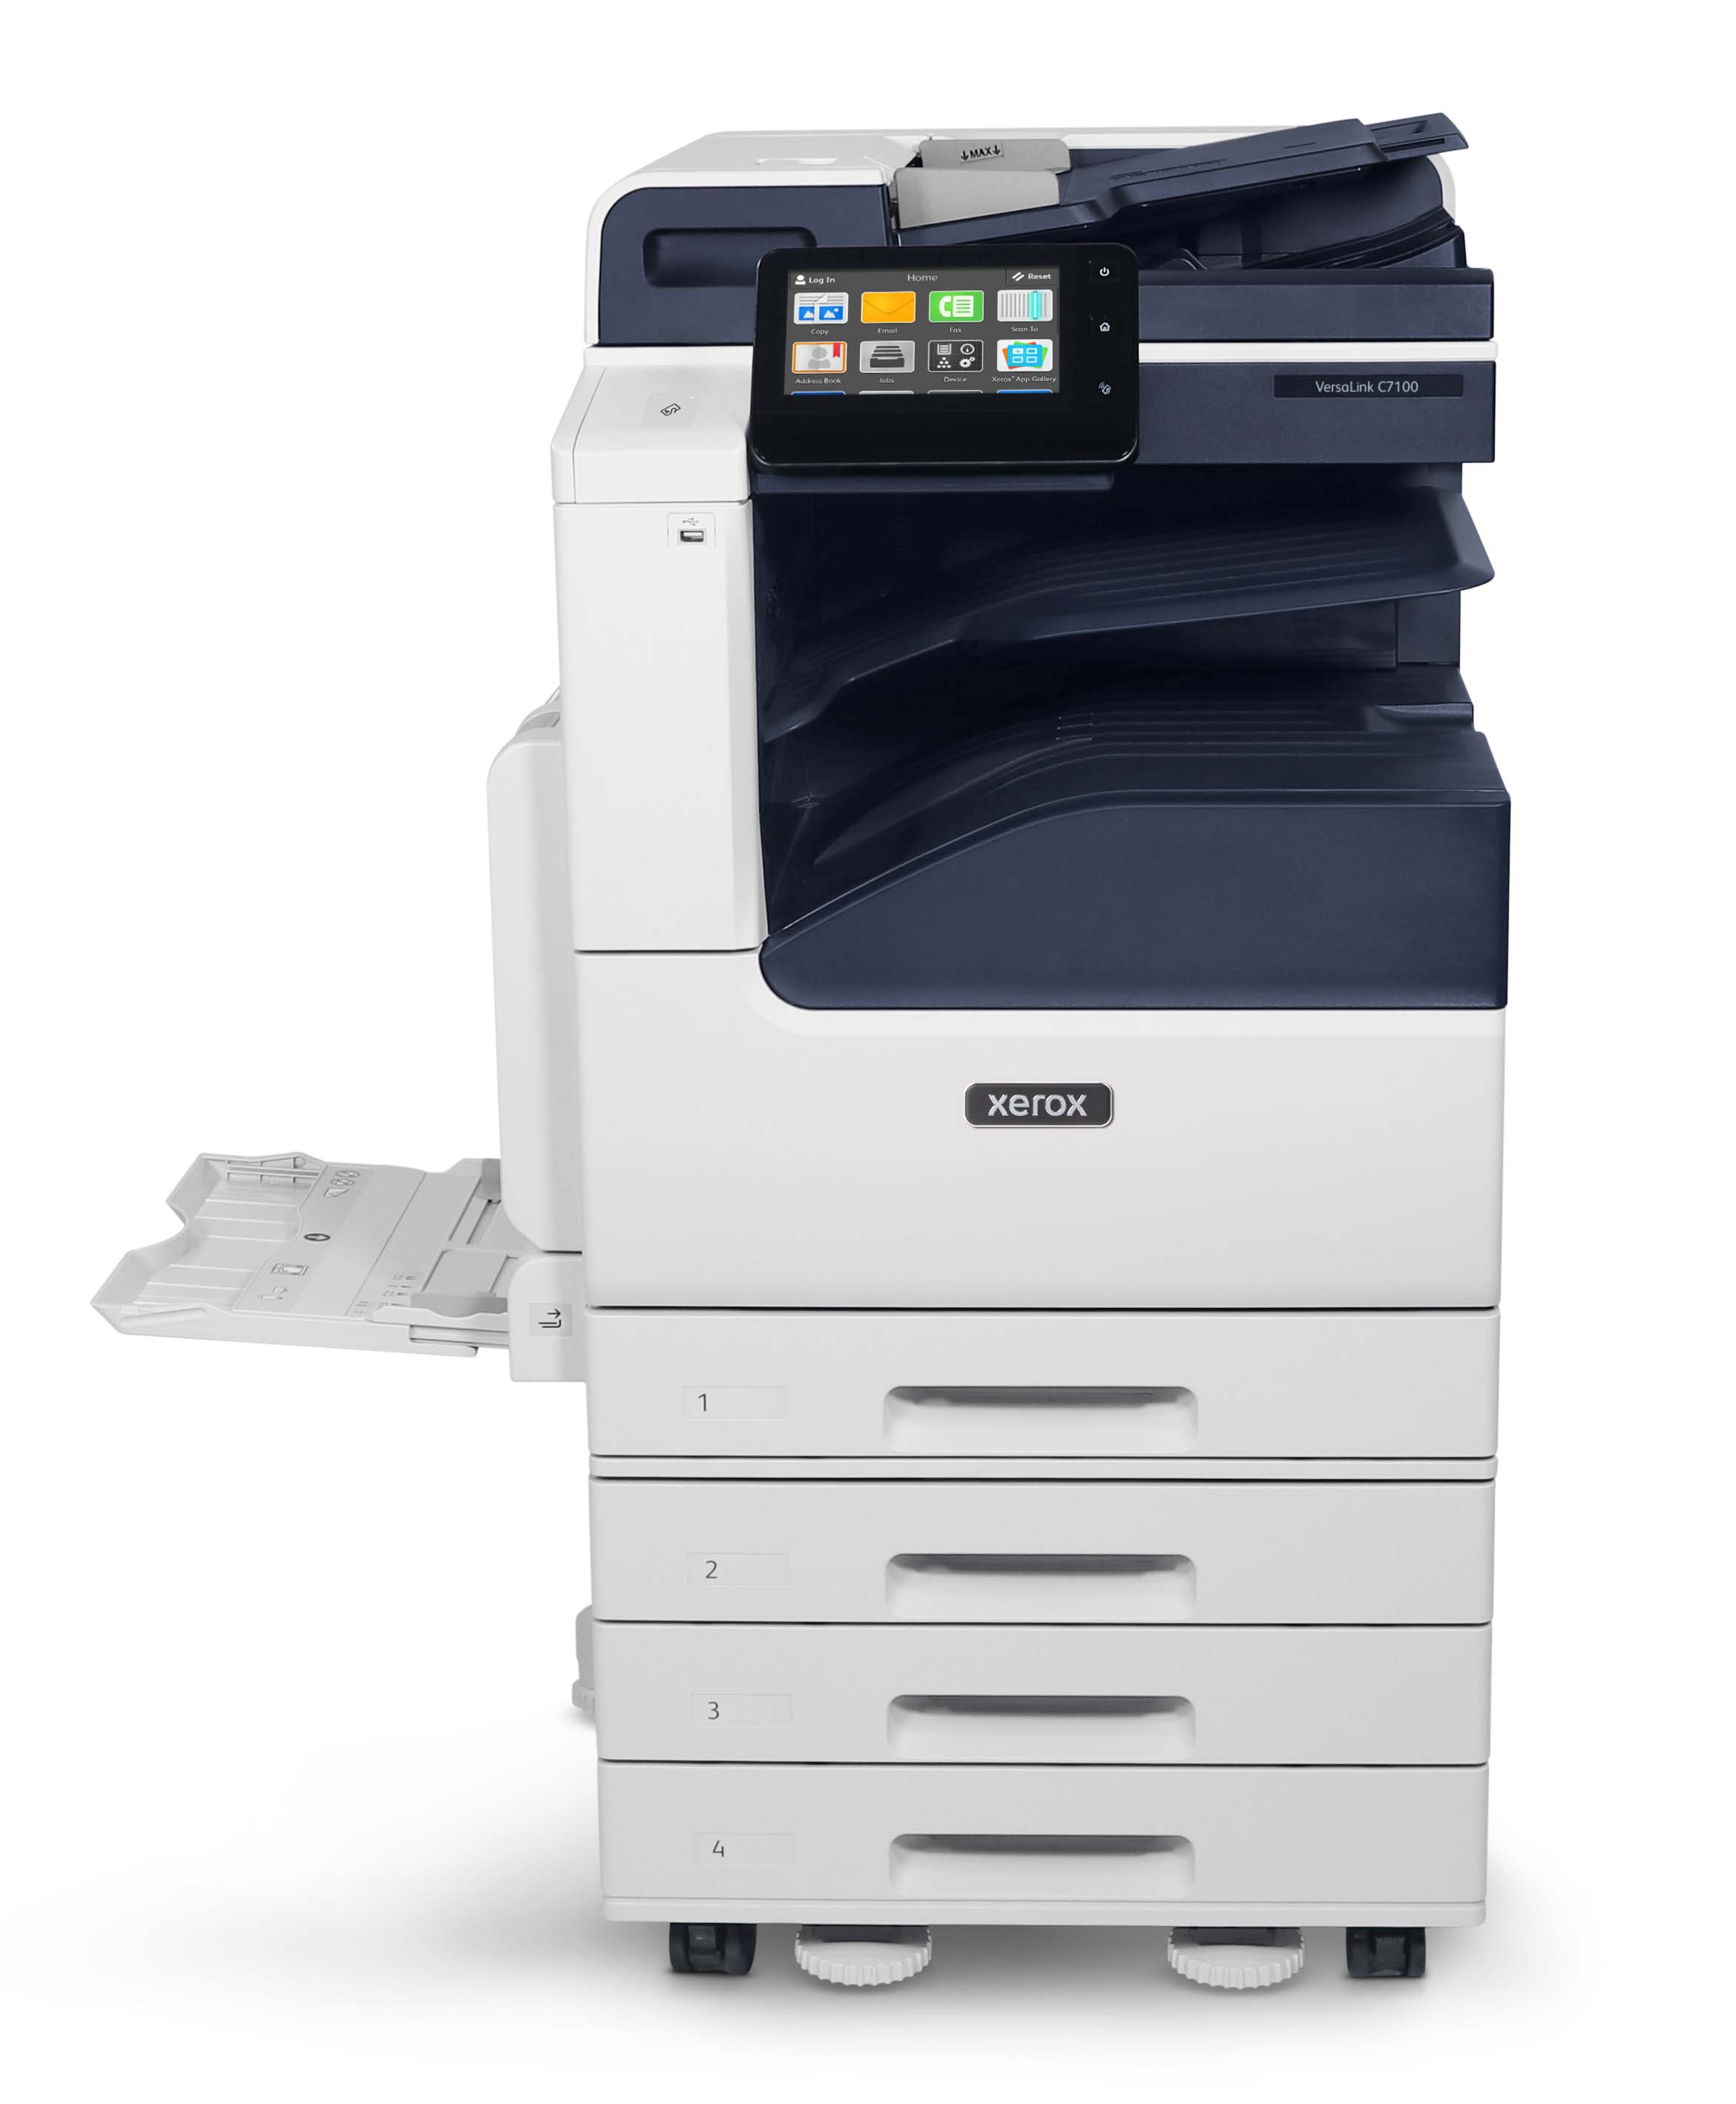 -VersaLink C7100 Series Colour Multi-Function Printer